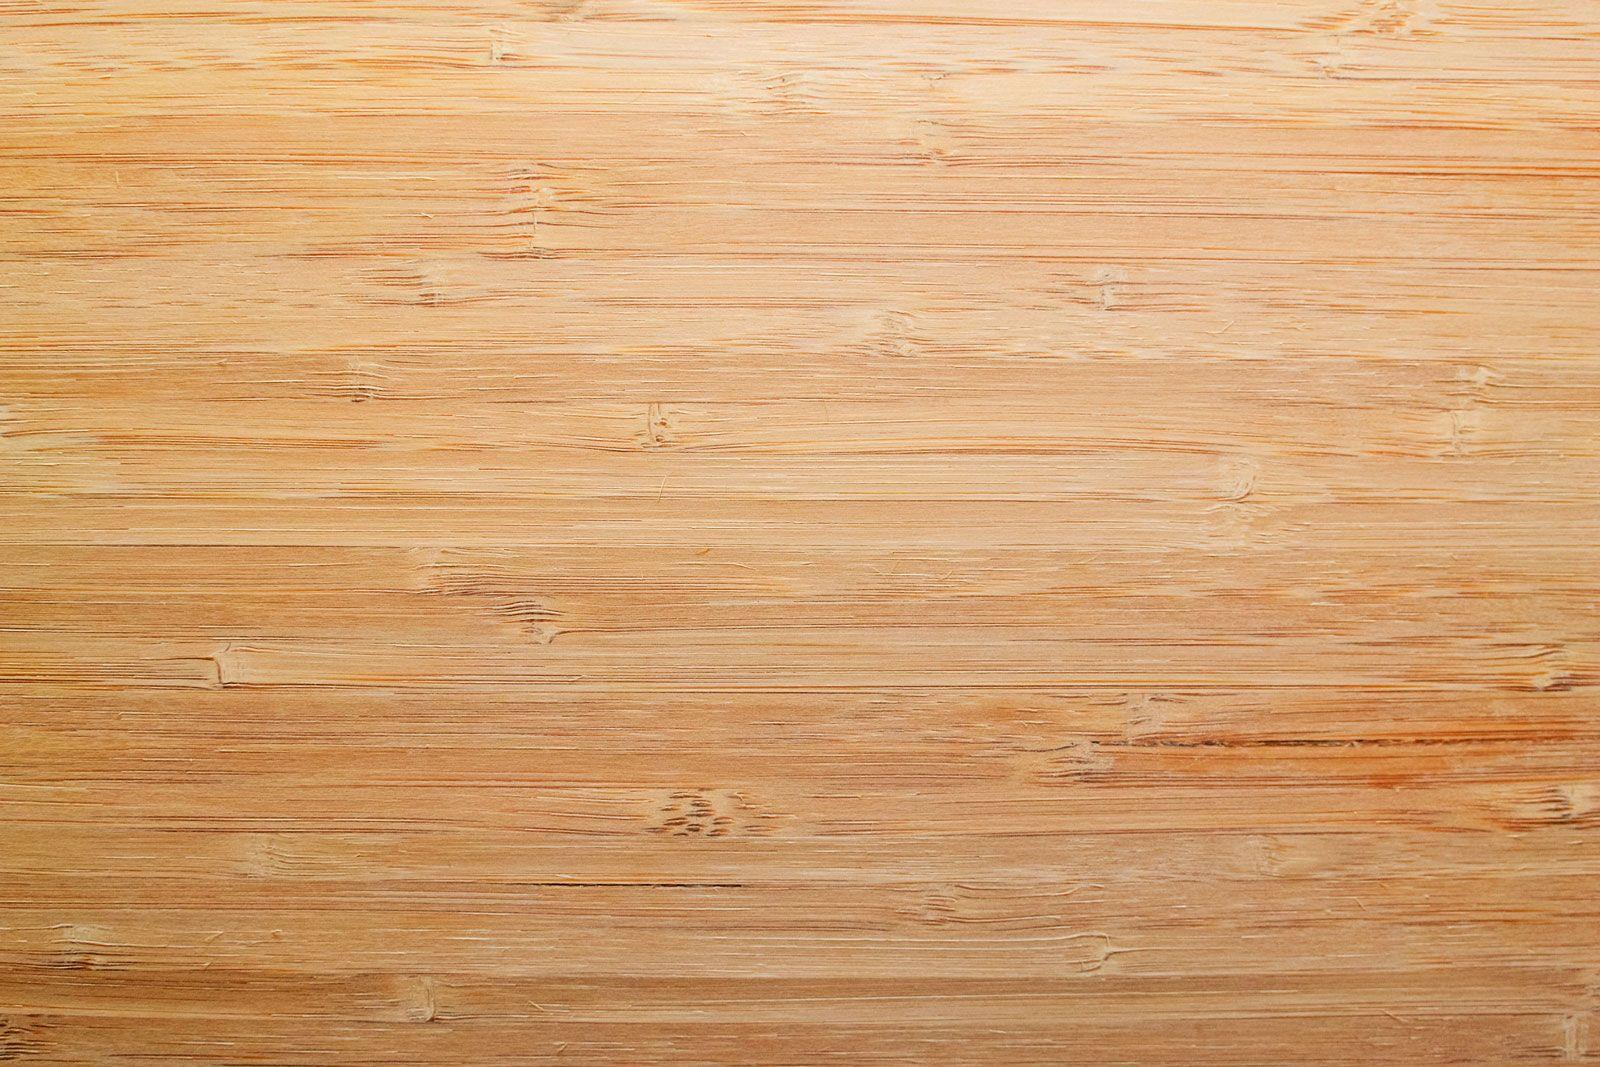 Dark Bamboo Flooring Texture And Natural Wood Grain Textures